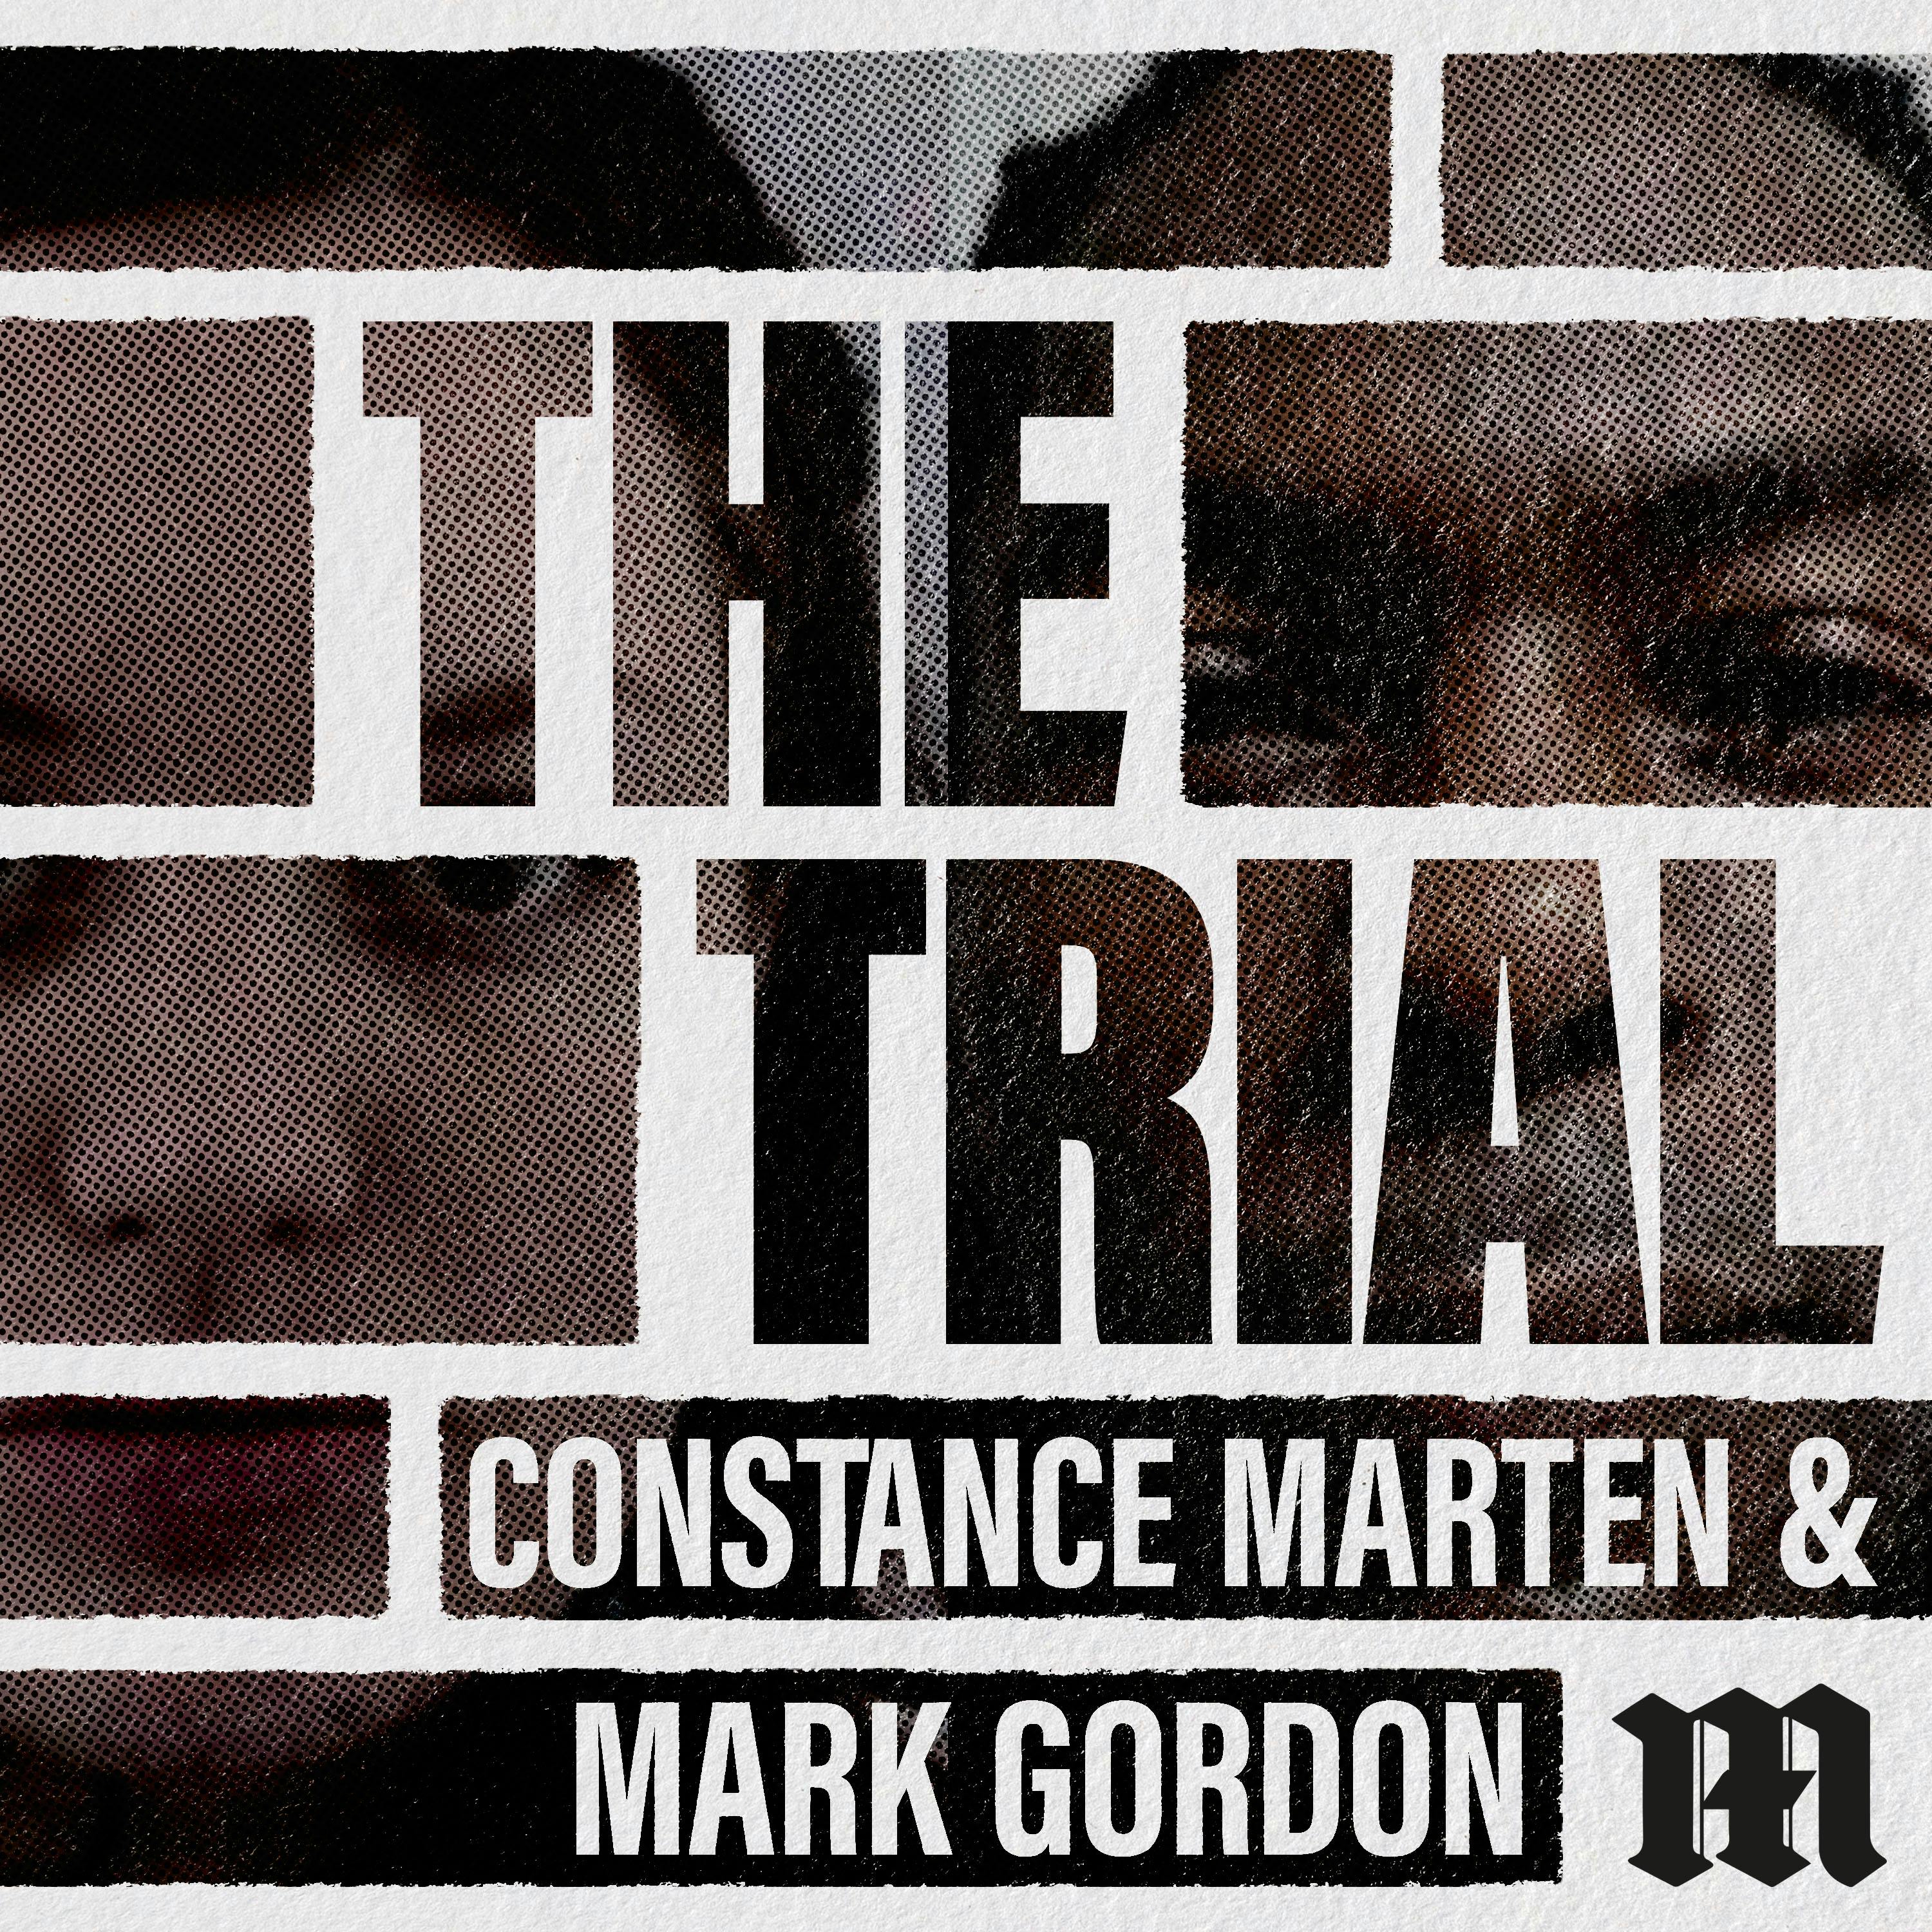 Constance Marten &  Mark Gordon: The jury retires